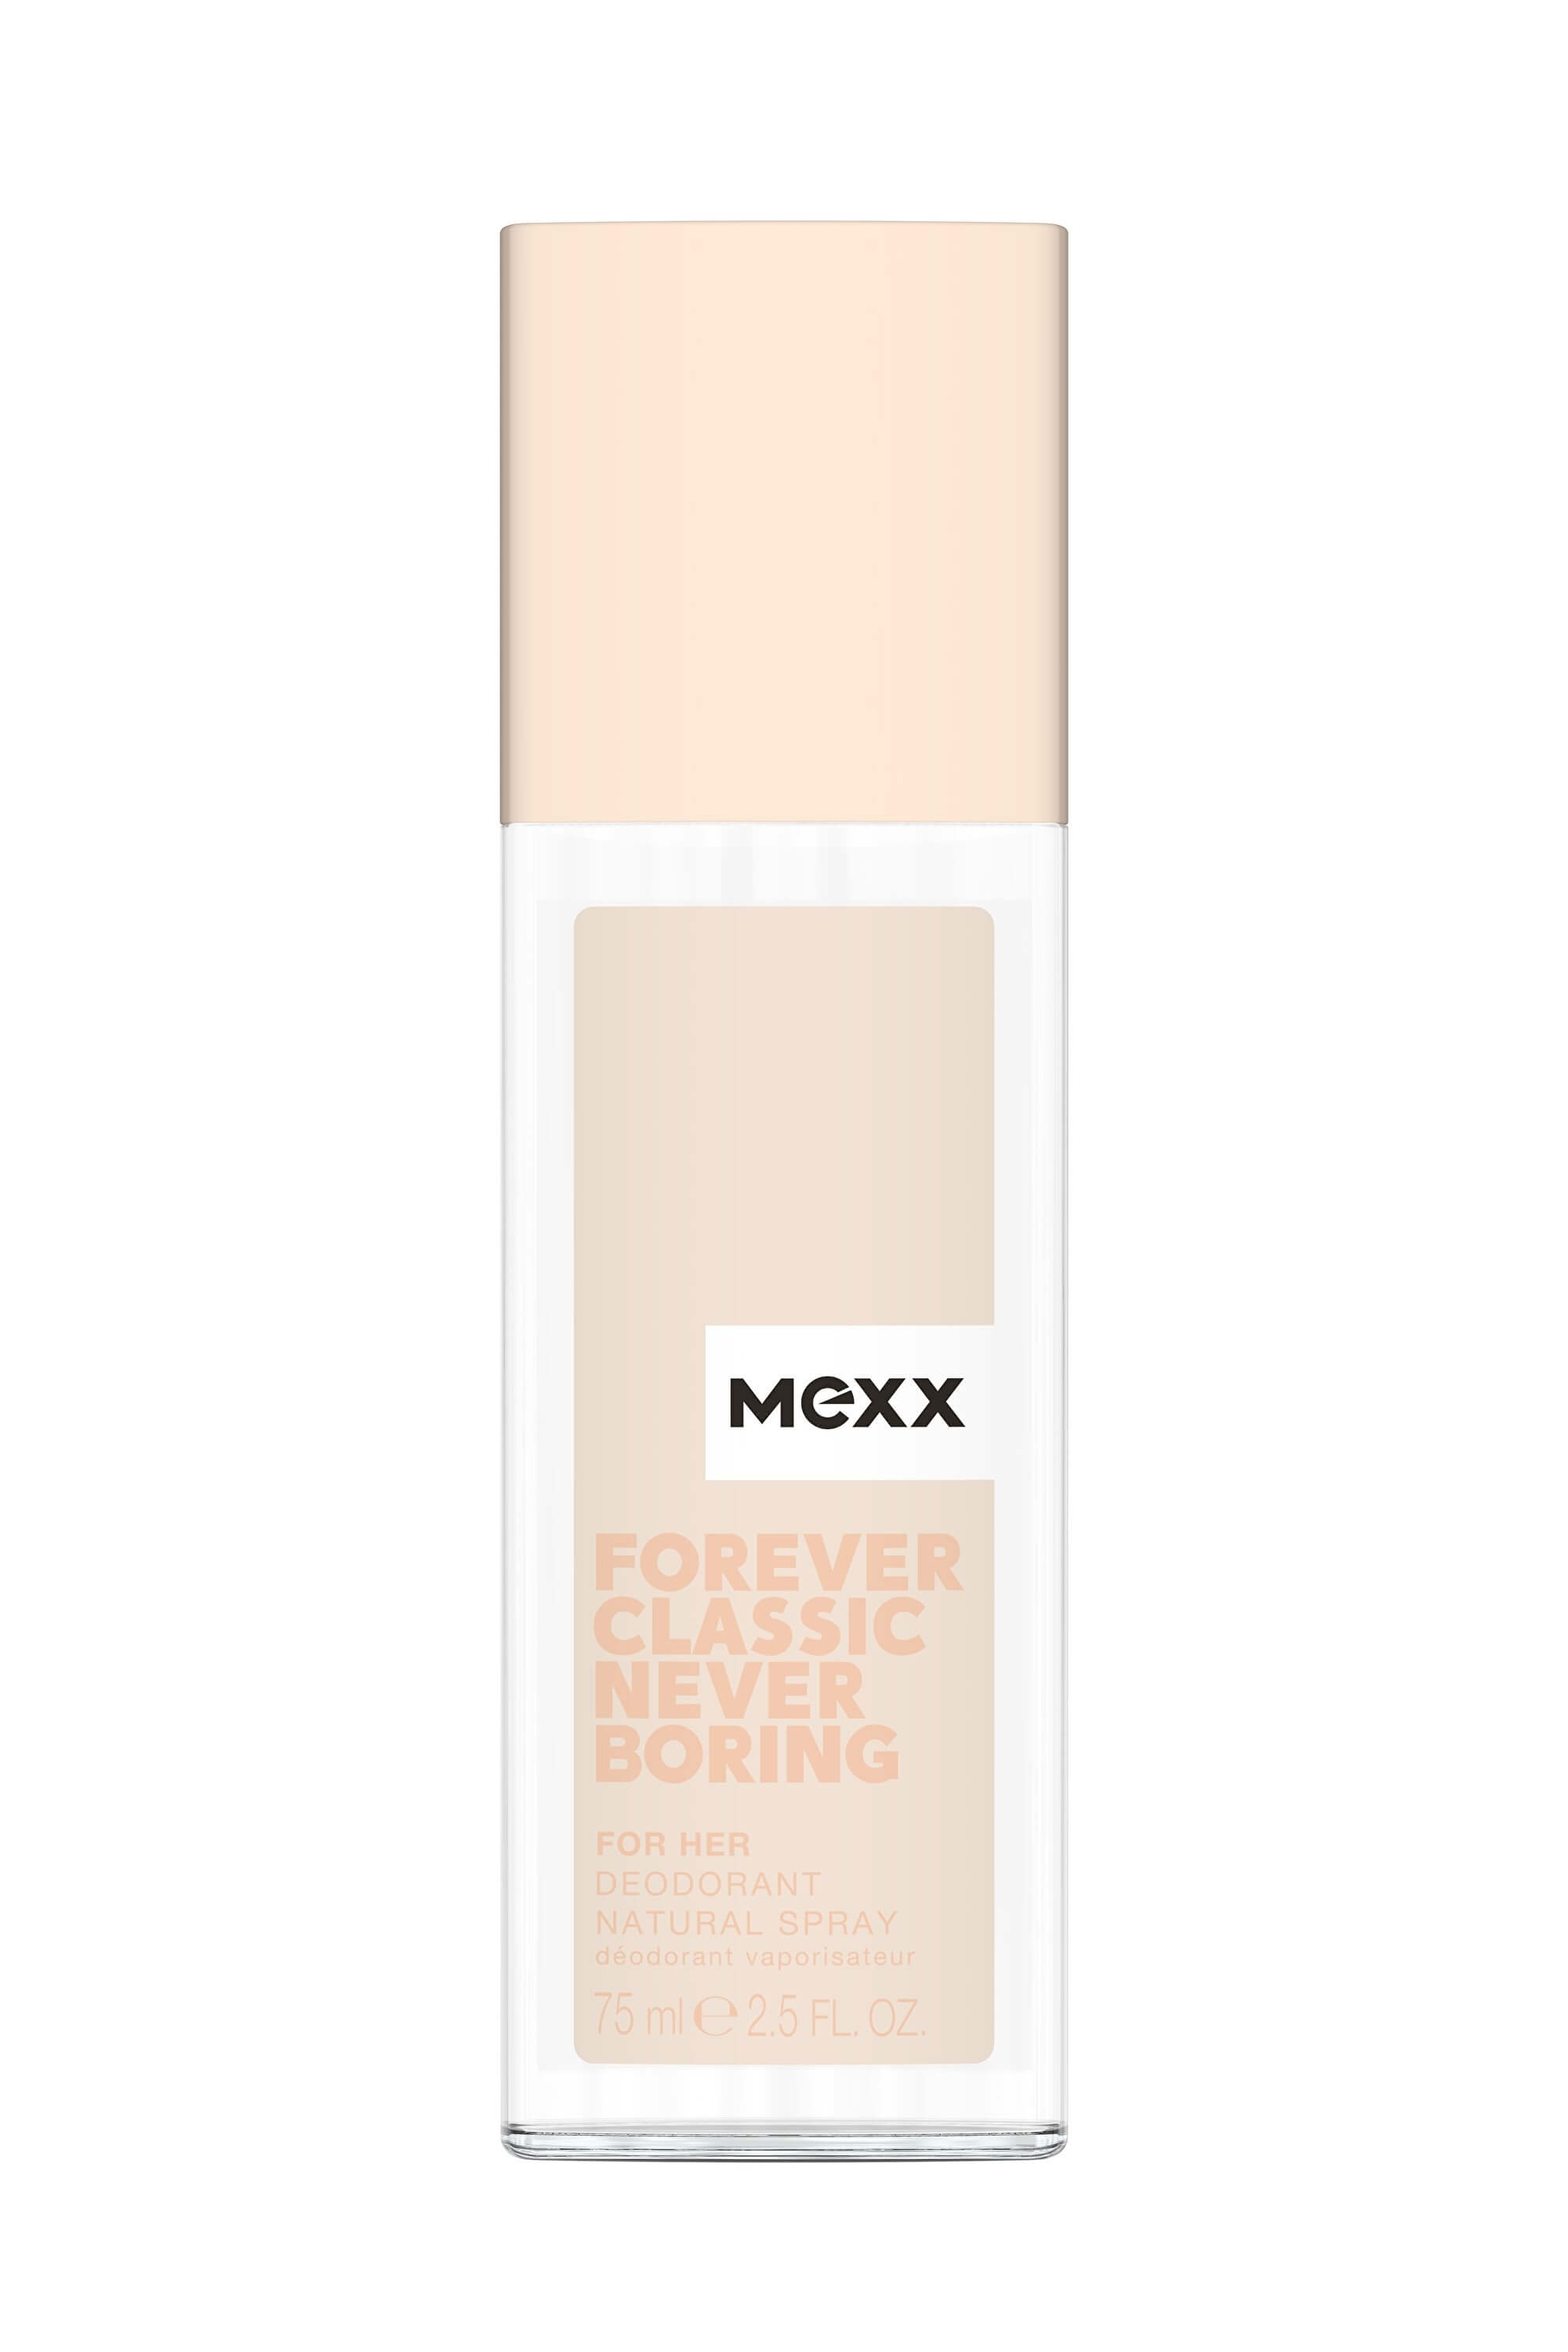 Mexx Forever Classic Never Boring for Her - deodorant s rozprašovačem 75 ml